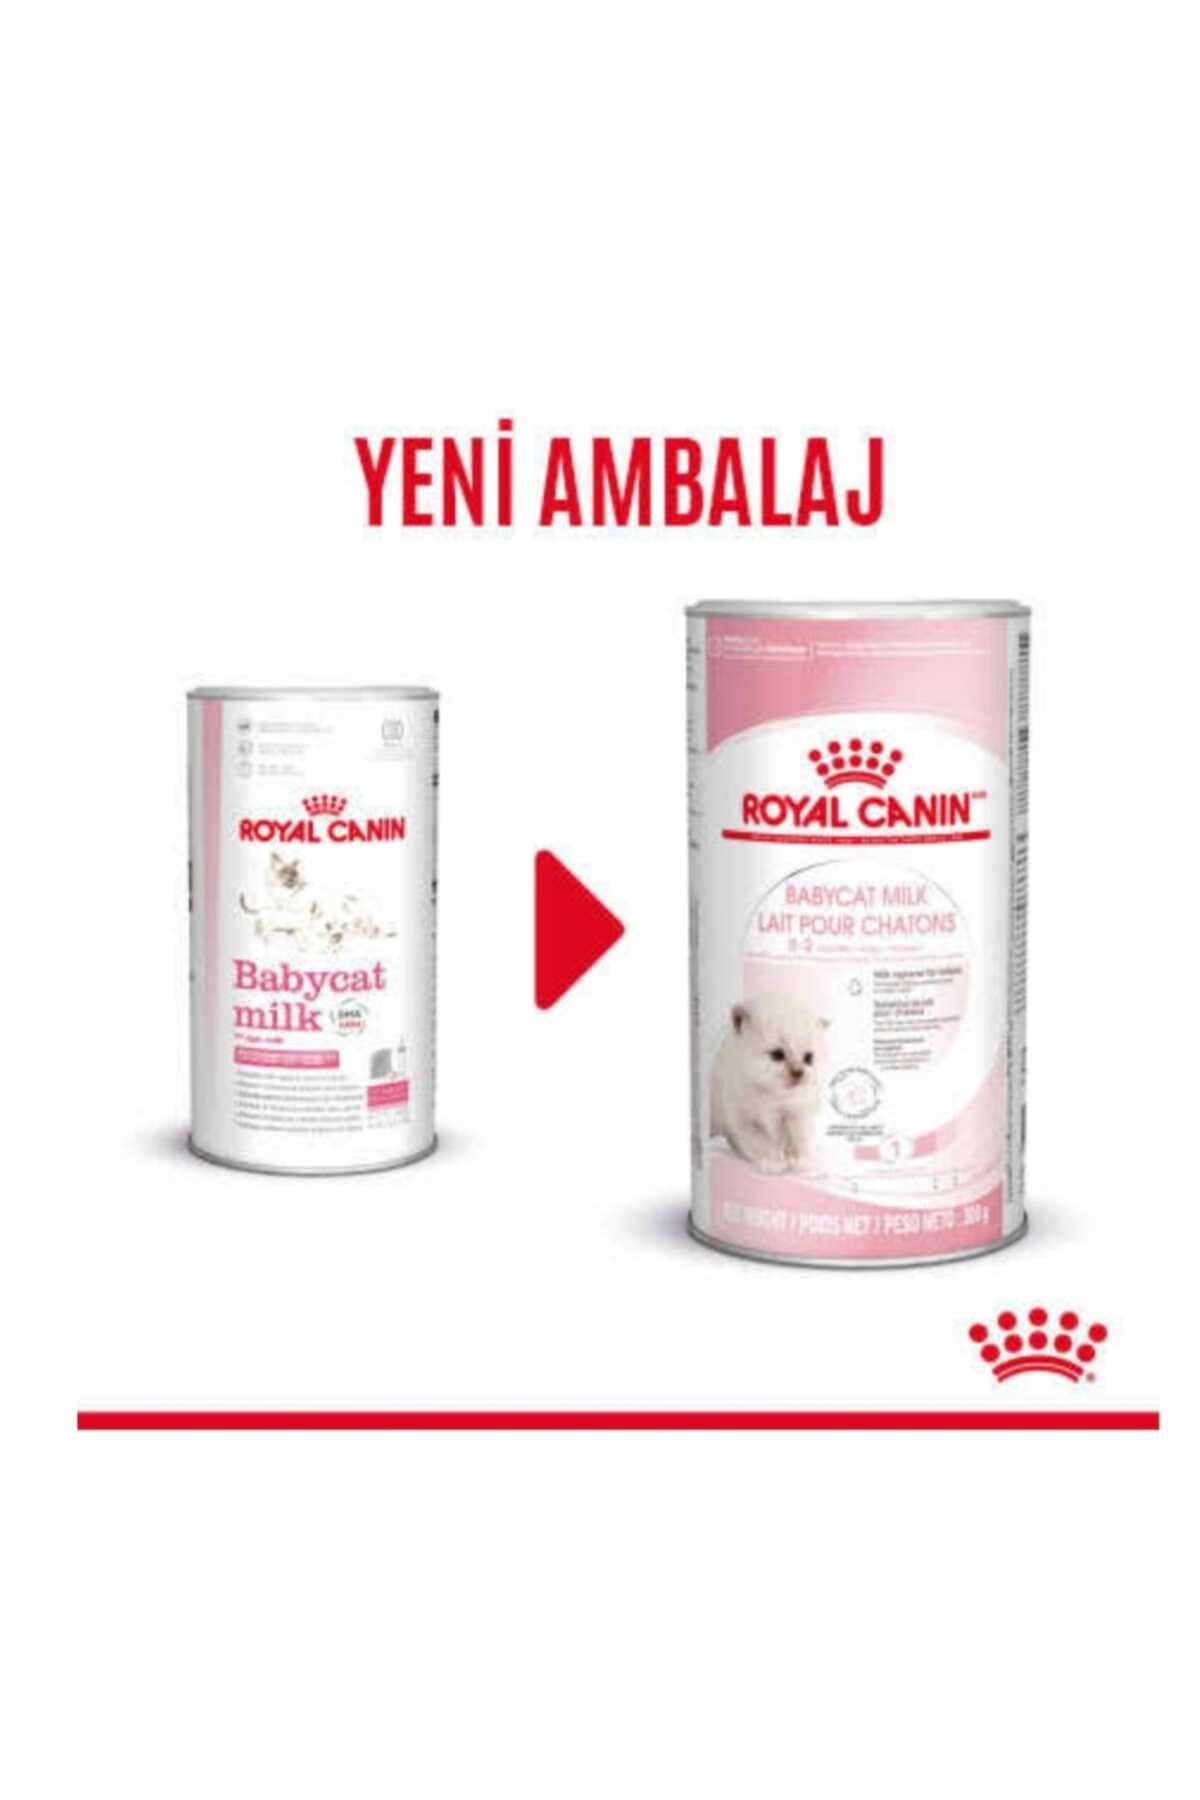 Royal Canin Neo Pet Market Royal Canin Babycat Milk Anne ve Yavru Kedi Süt Tozu Devam Sütü 300 Gr.+ Biberon Seti